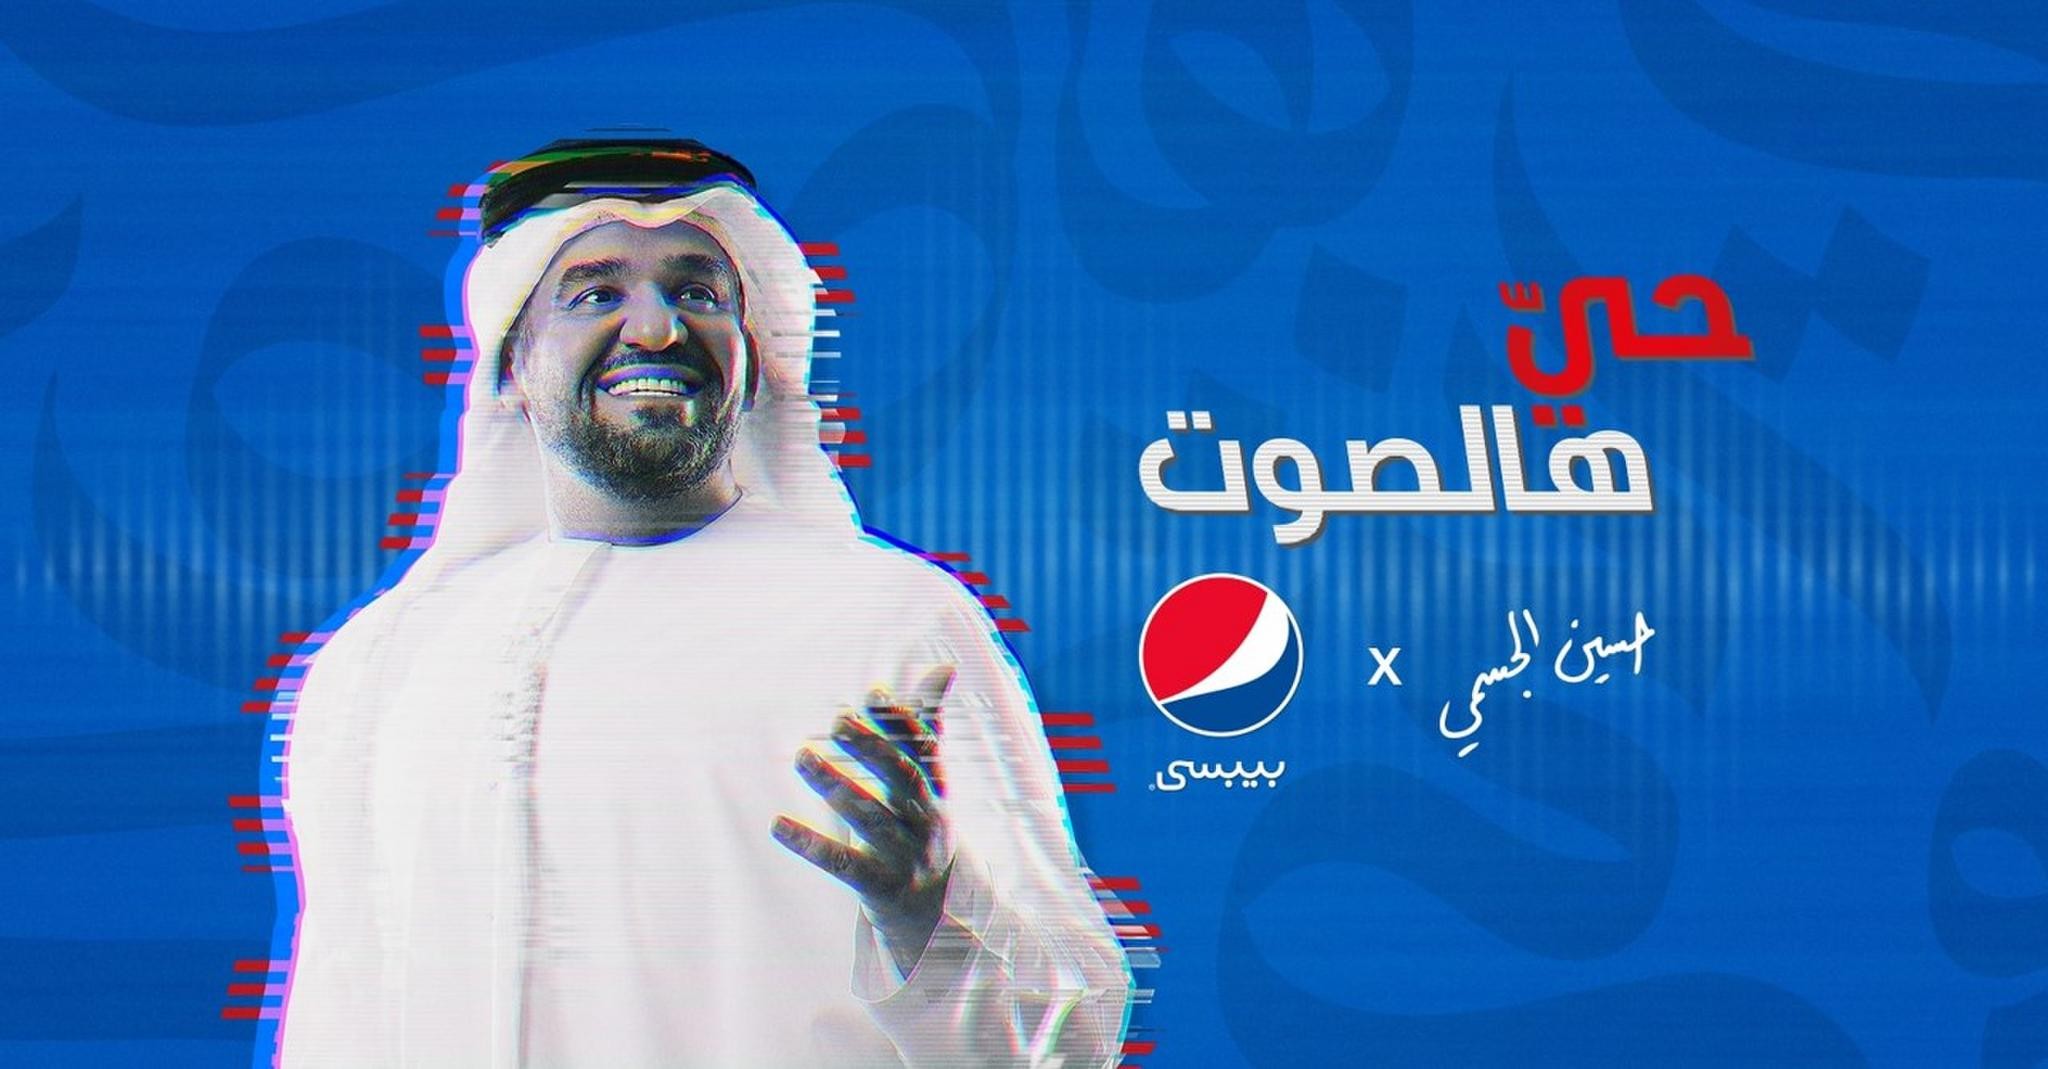 Pepsi Music Campaign